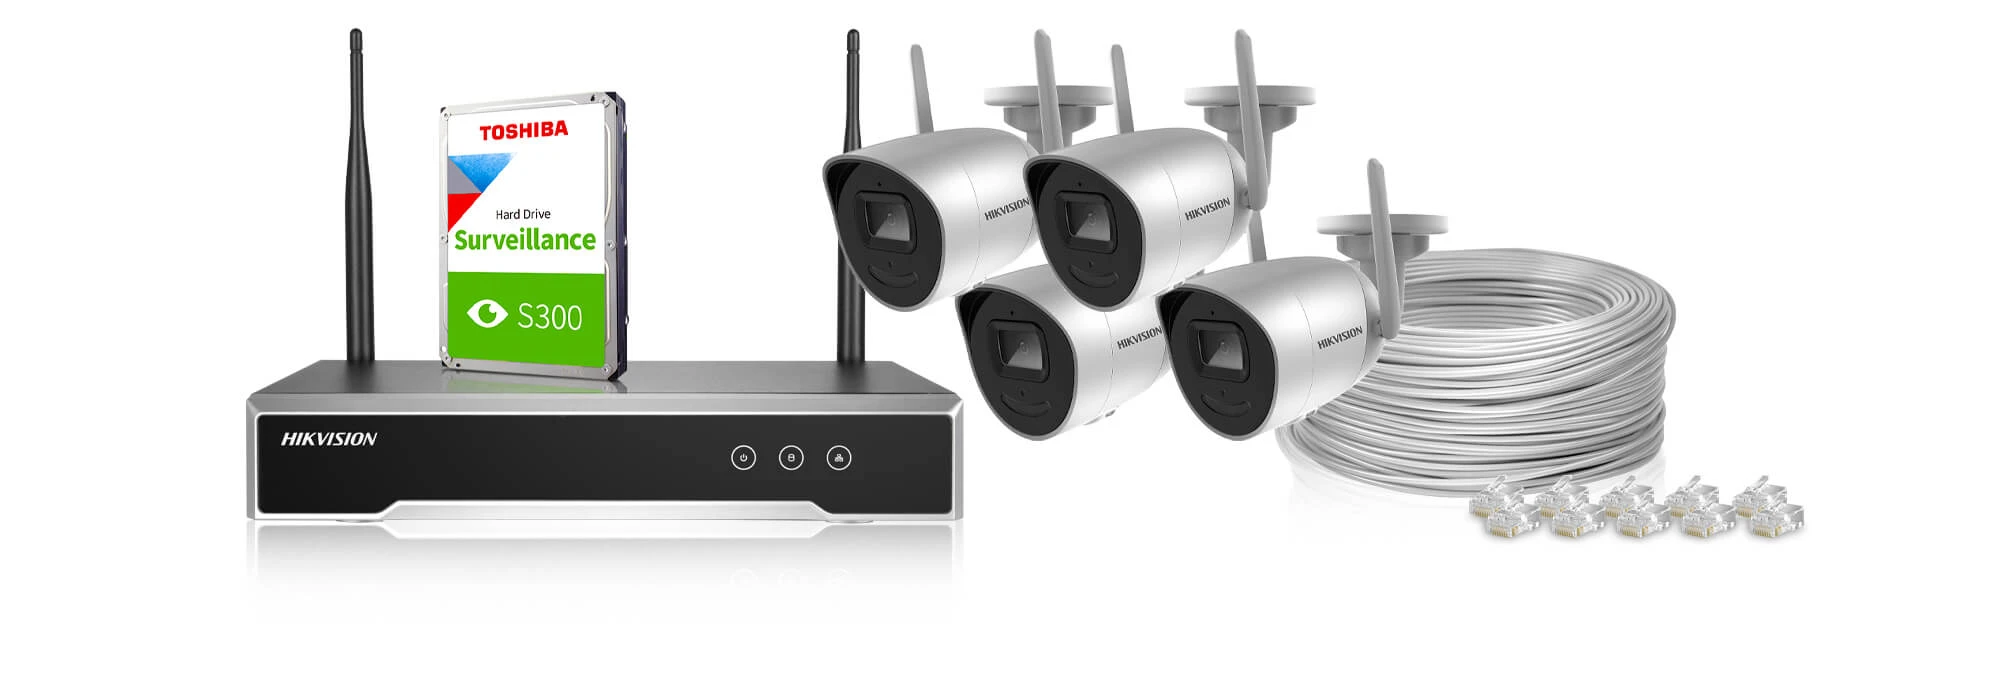 Wireless basic home monitoring kit